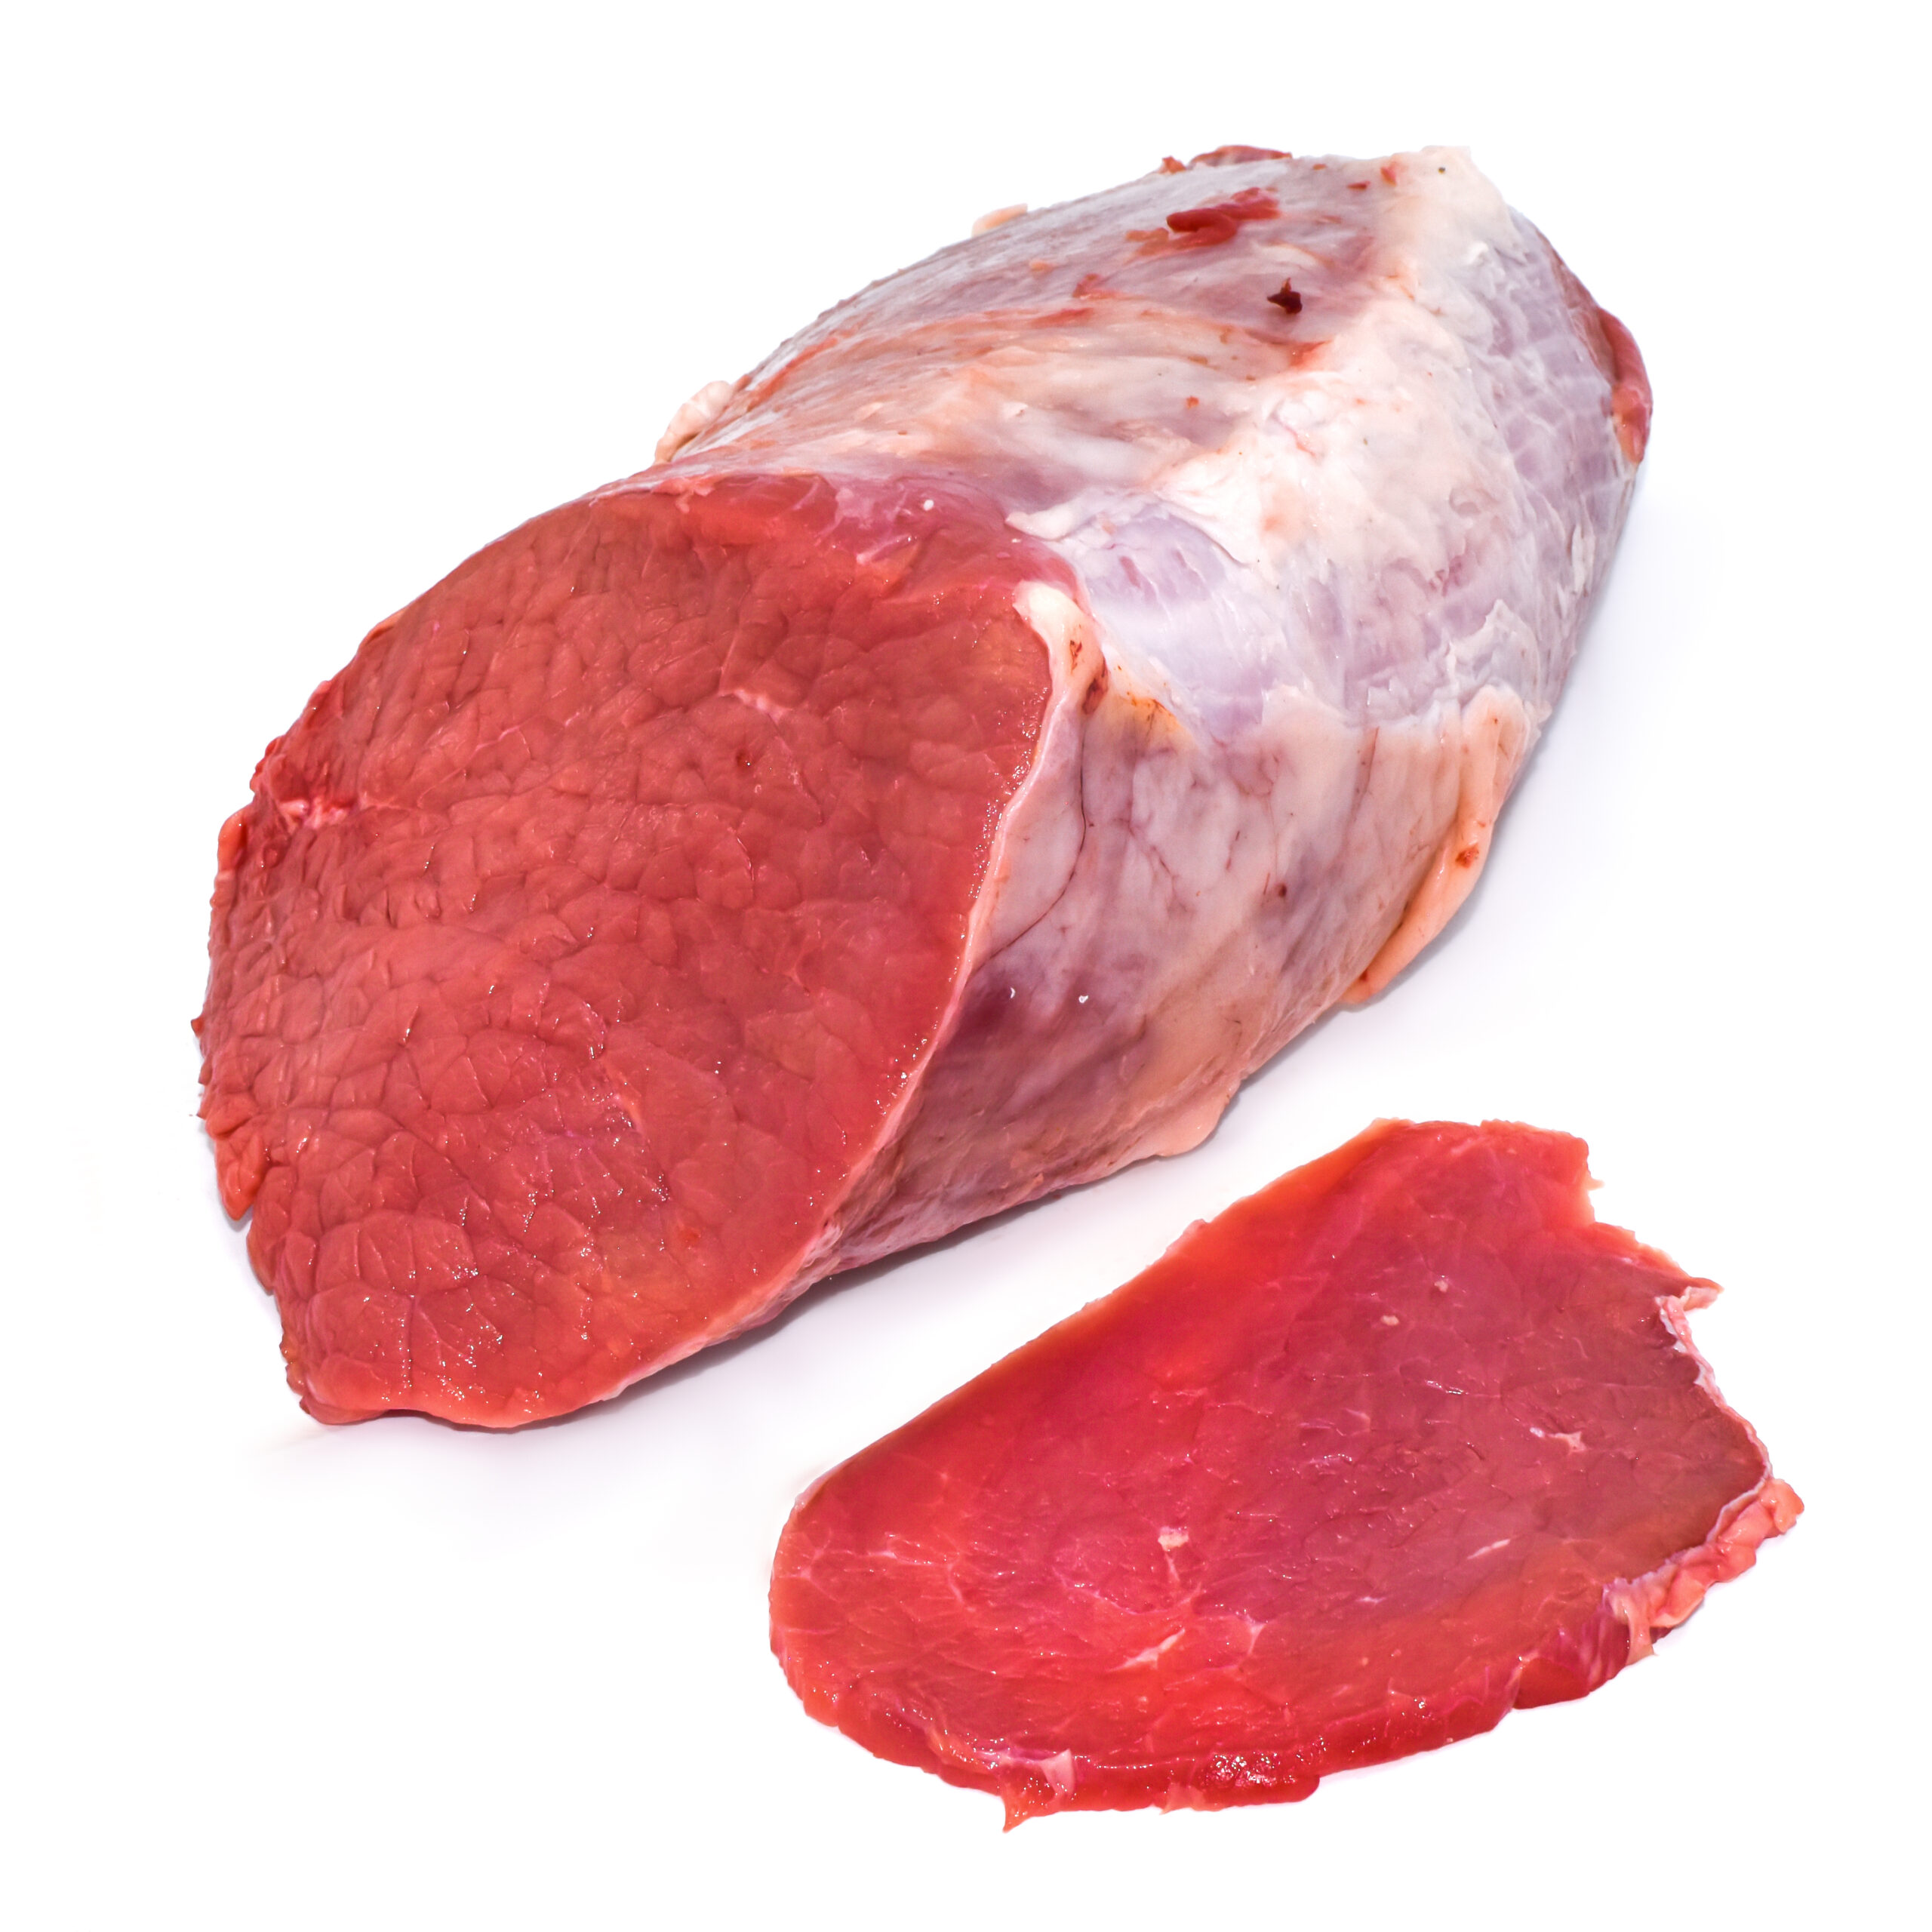 Carne picada ternera 0,5kg - JM Gourmet